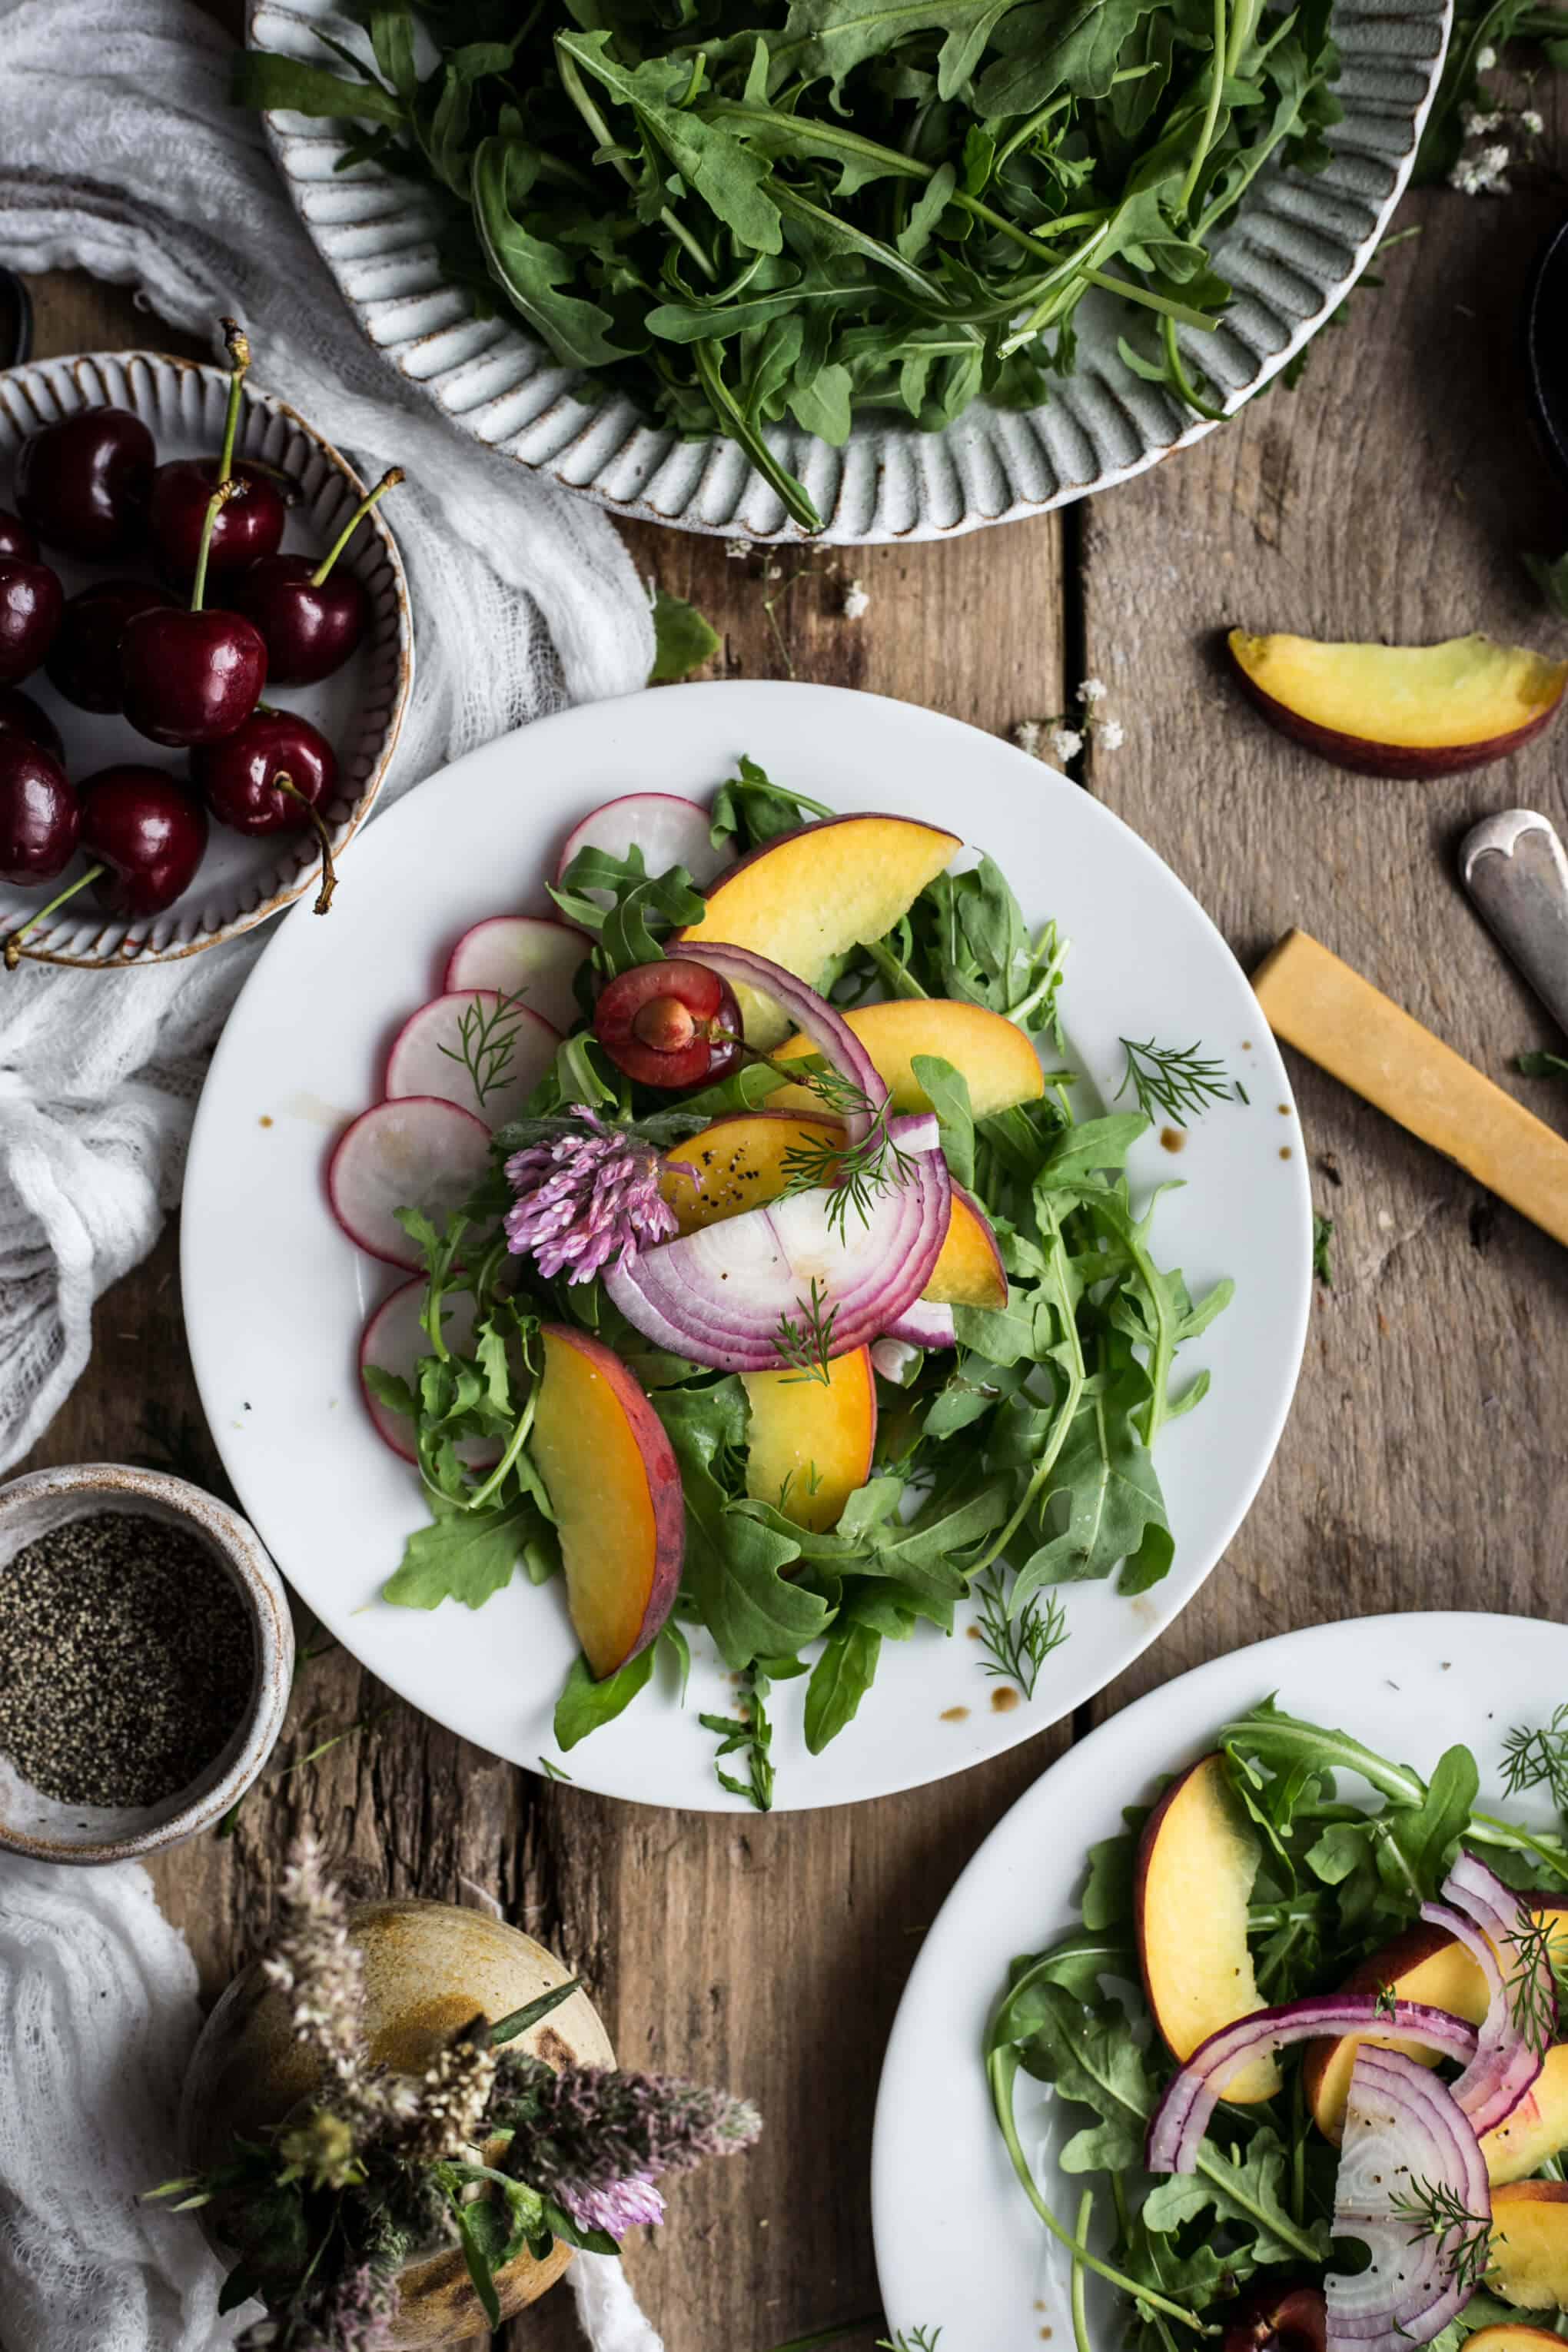 Peach and rocket salad with dill | via @annabanana.co